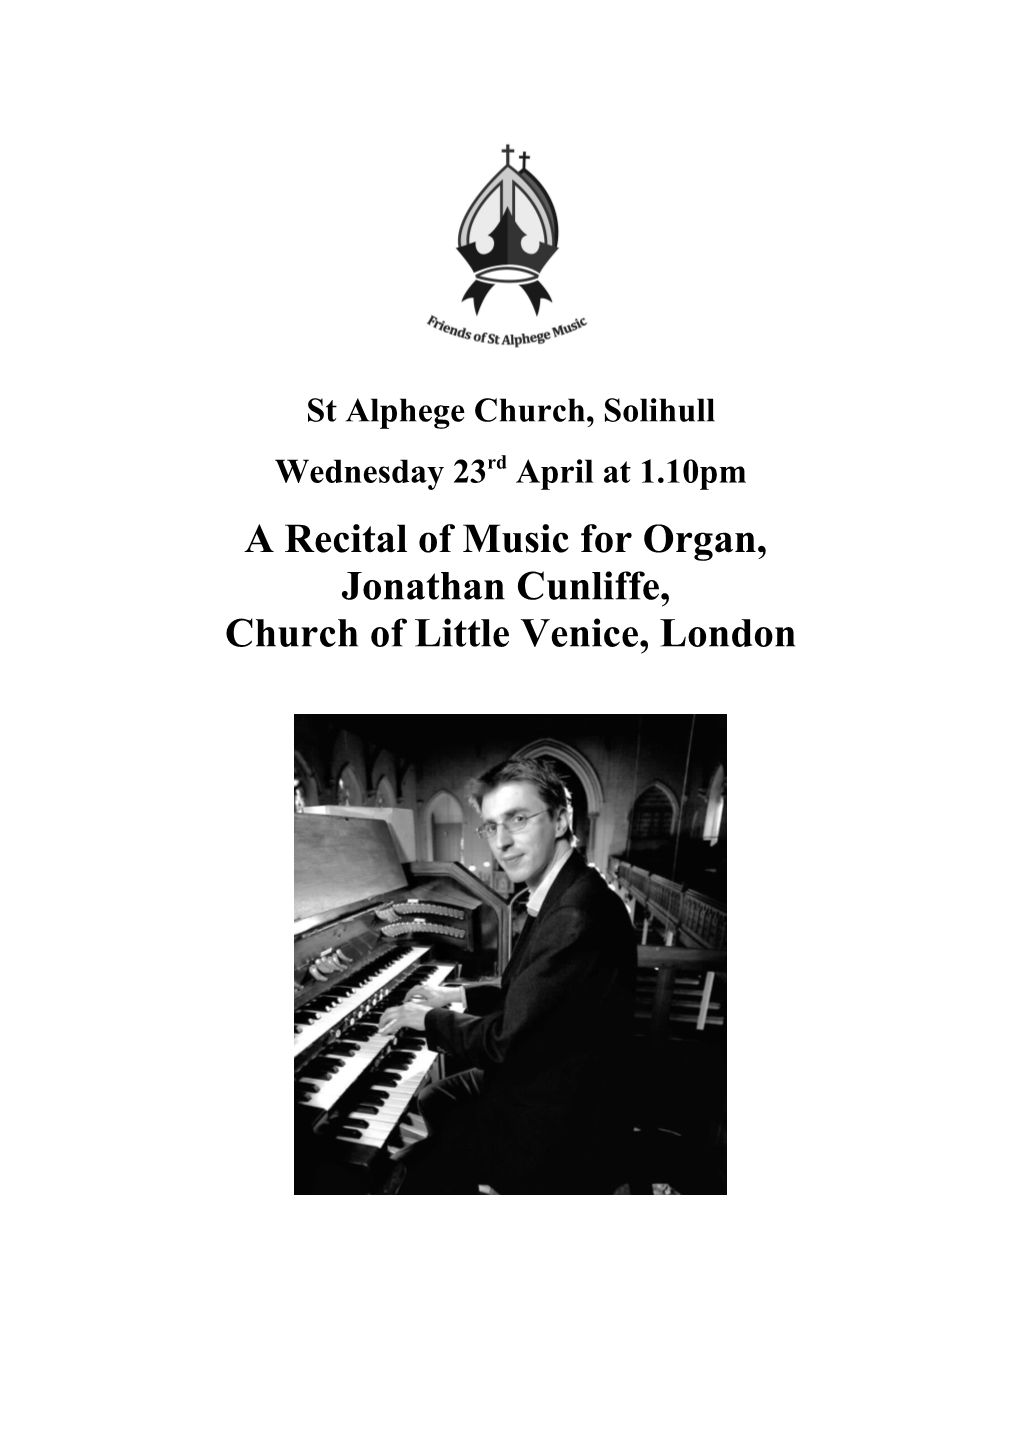 A Recital of Music for Organ